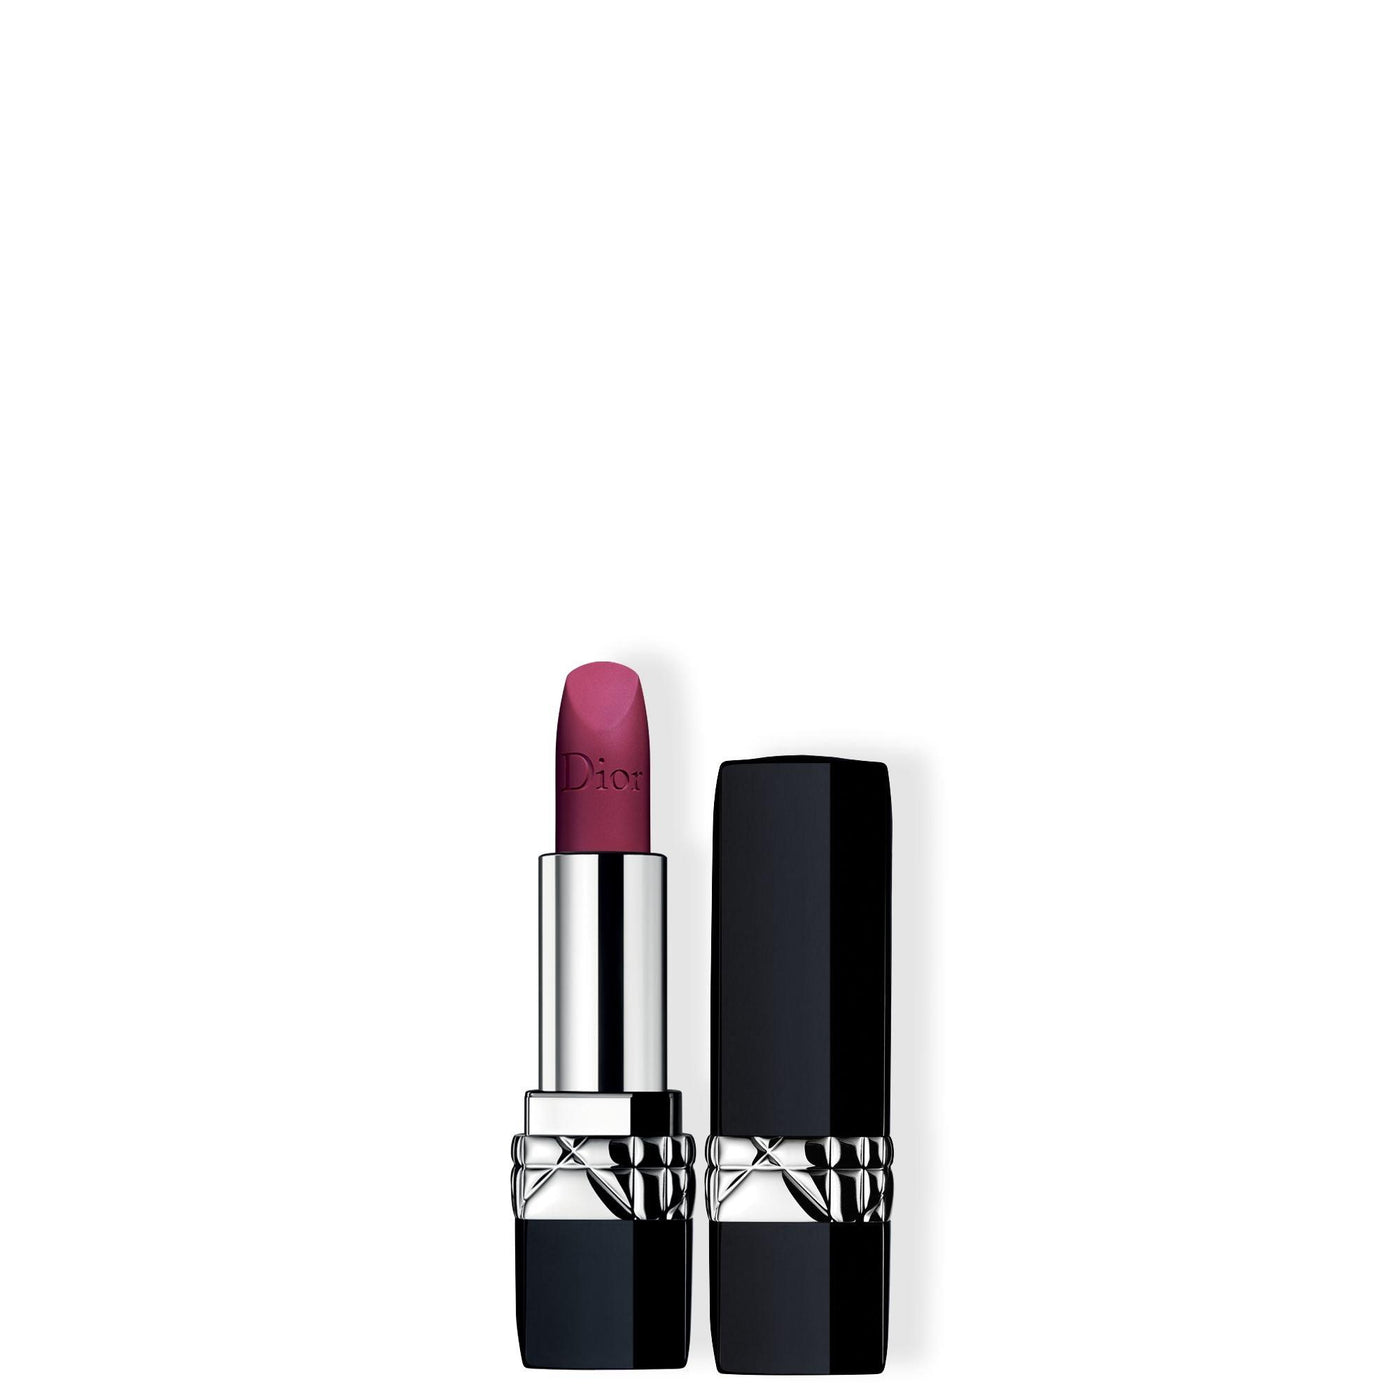 Dior Lipstick Matte Tester with Plastic Cap